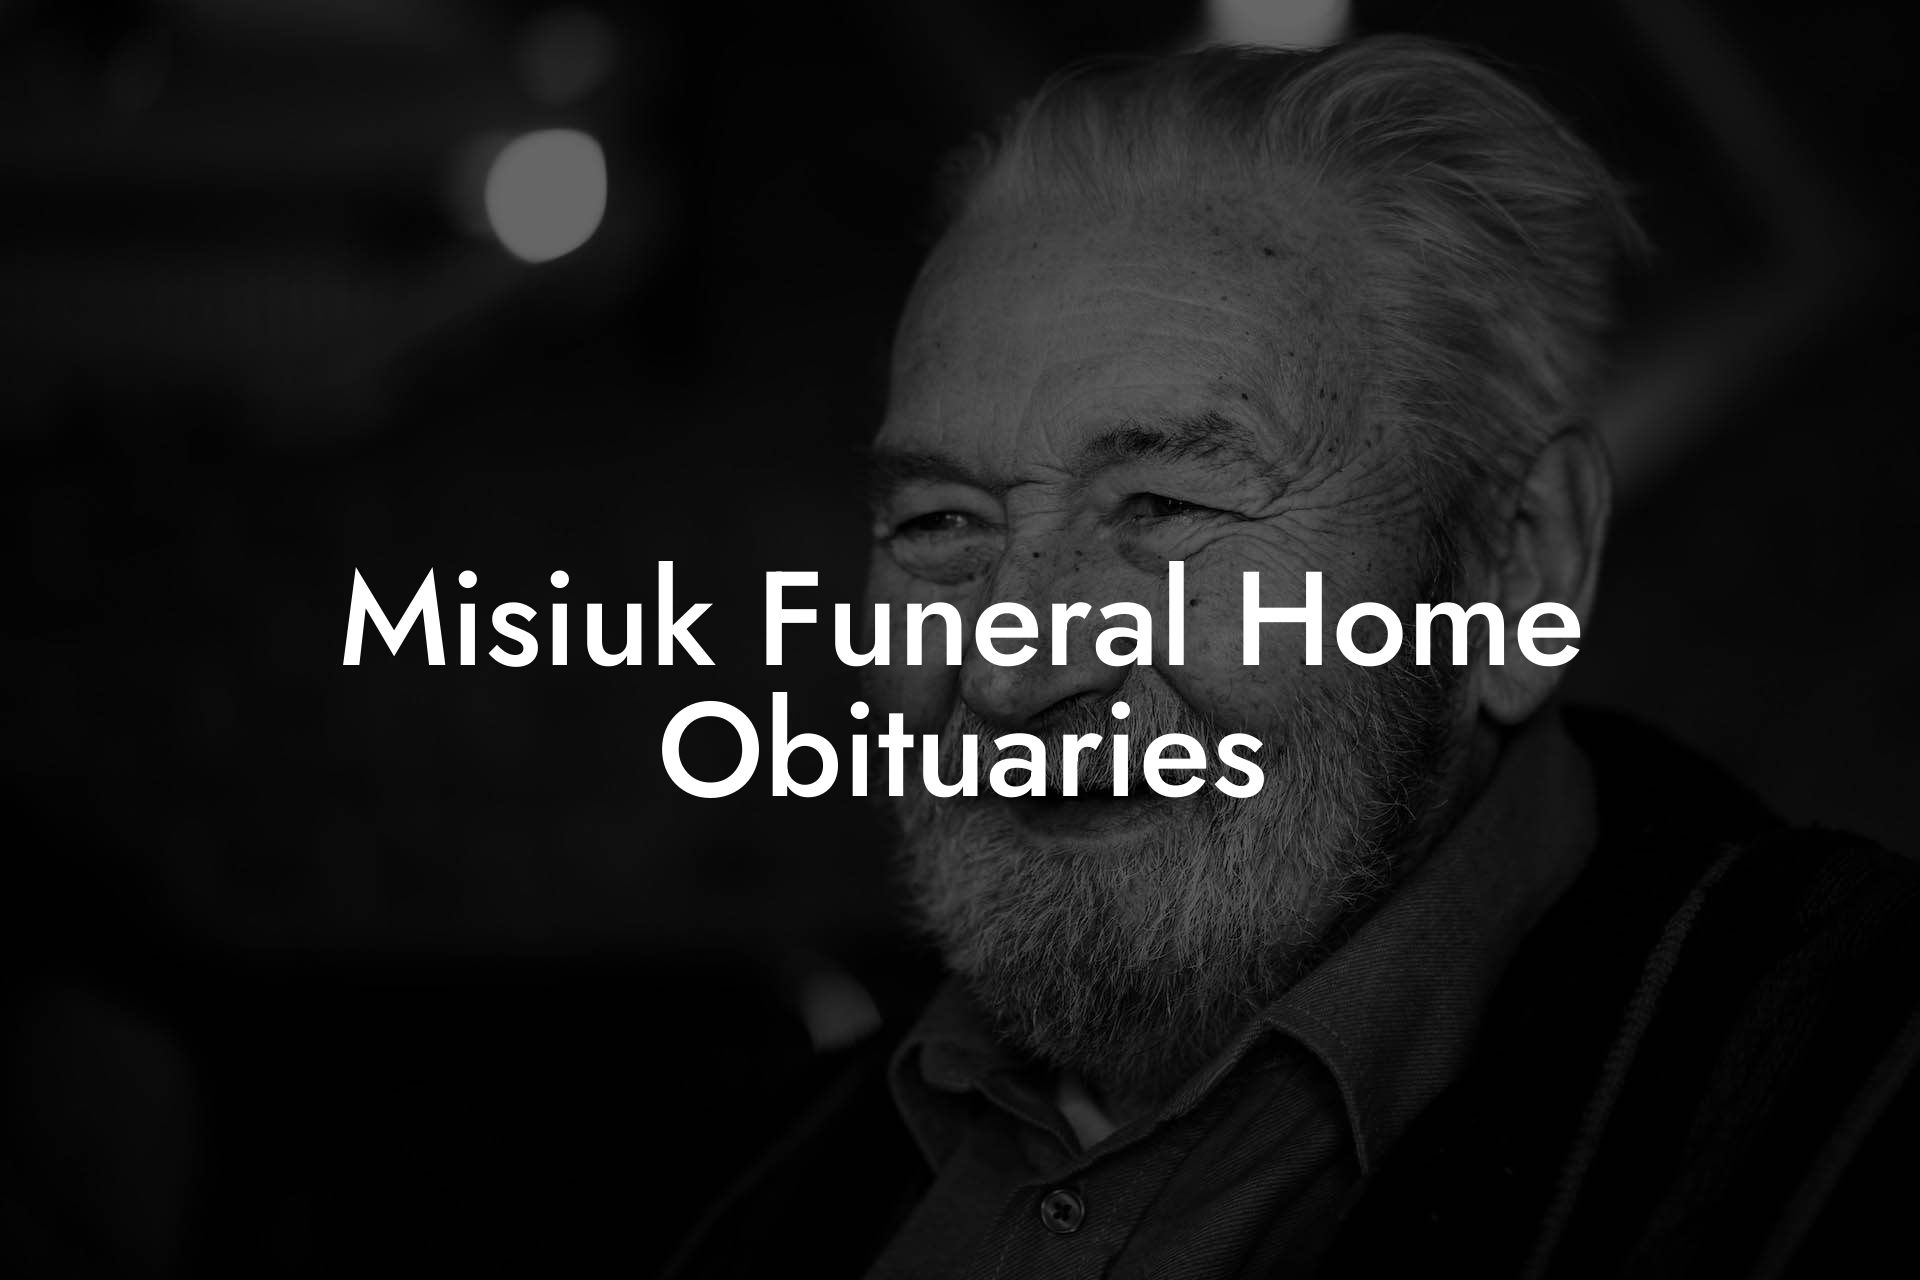 Misiuk Funeral Home Obituaries